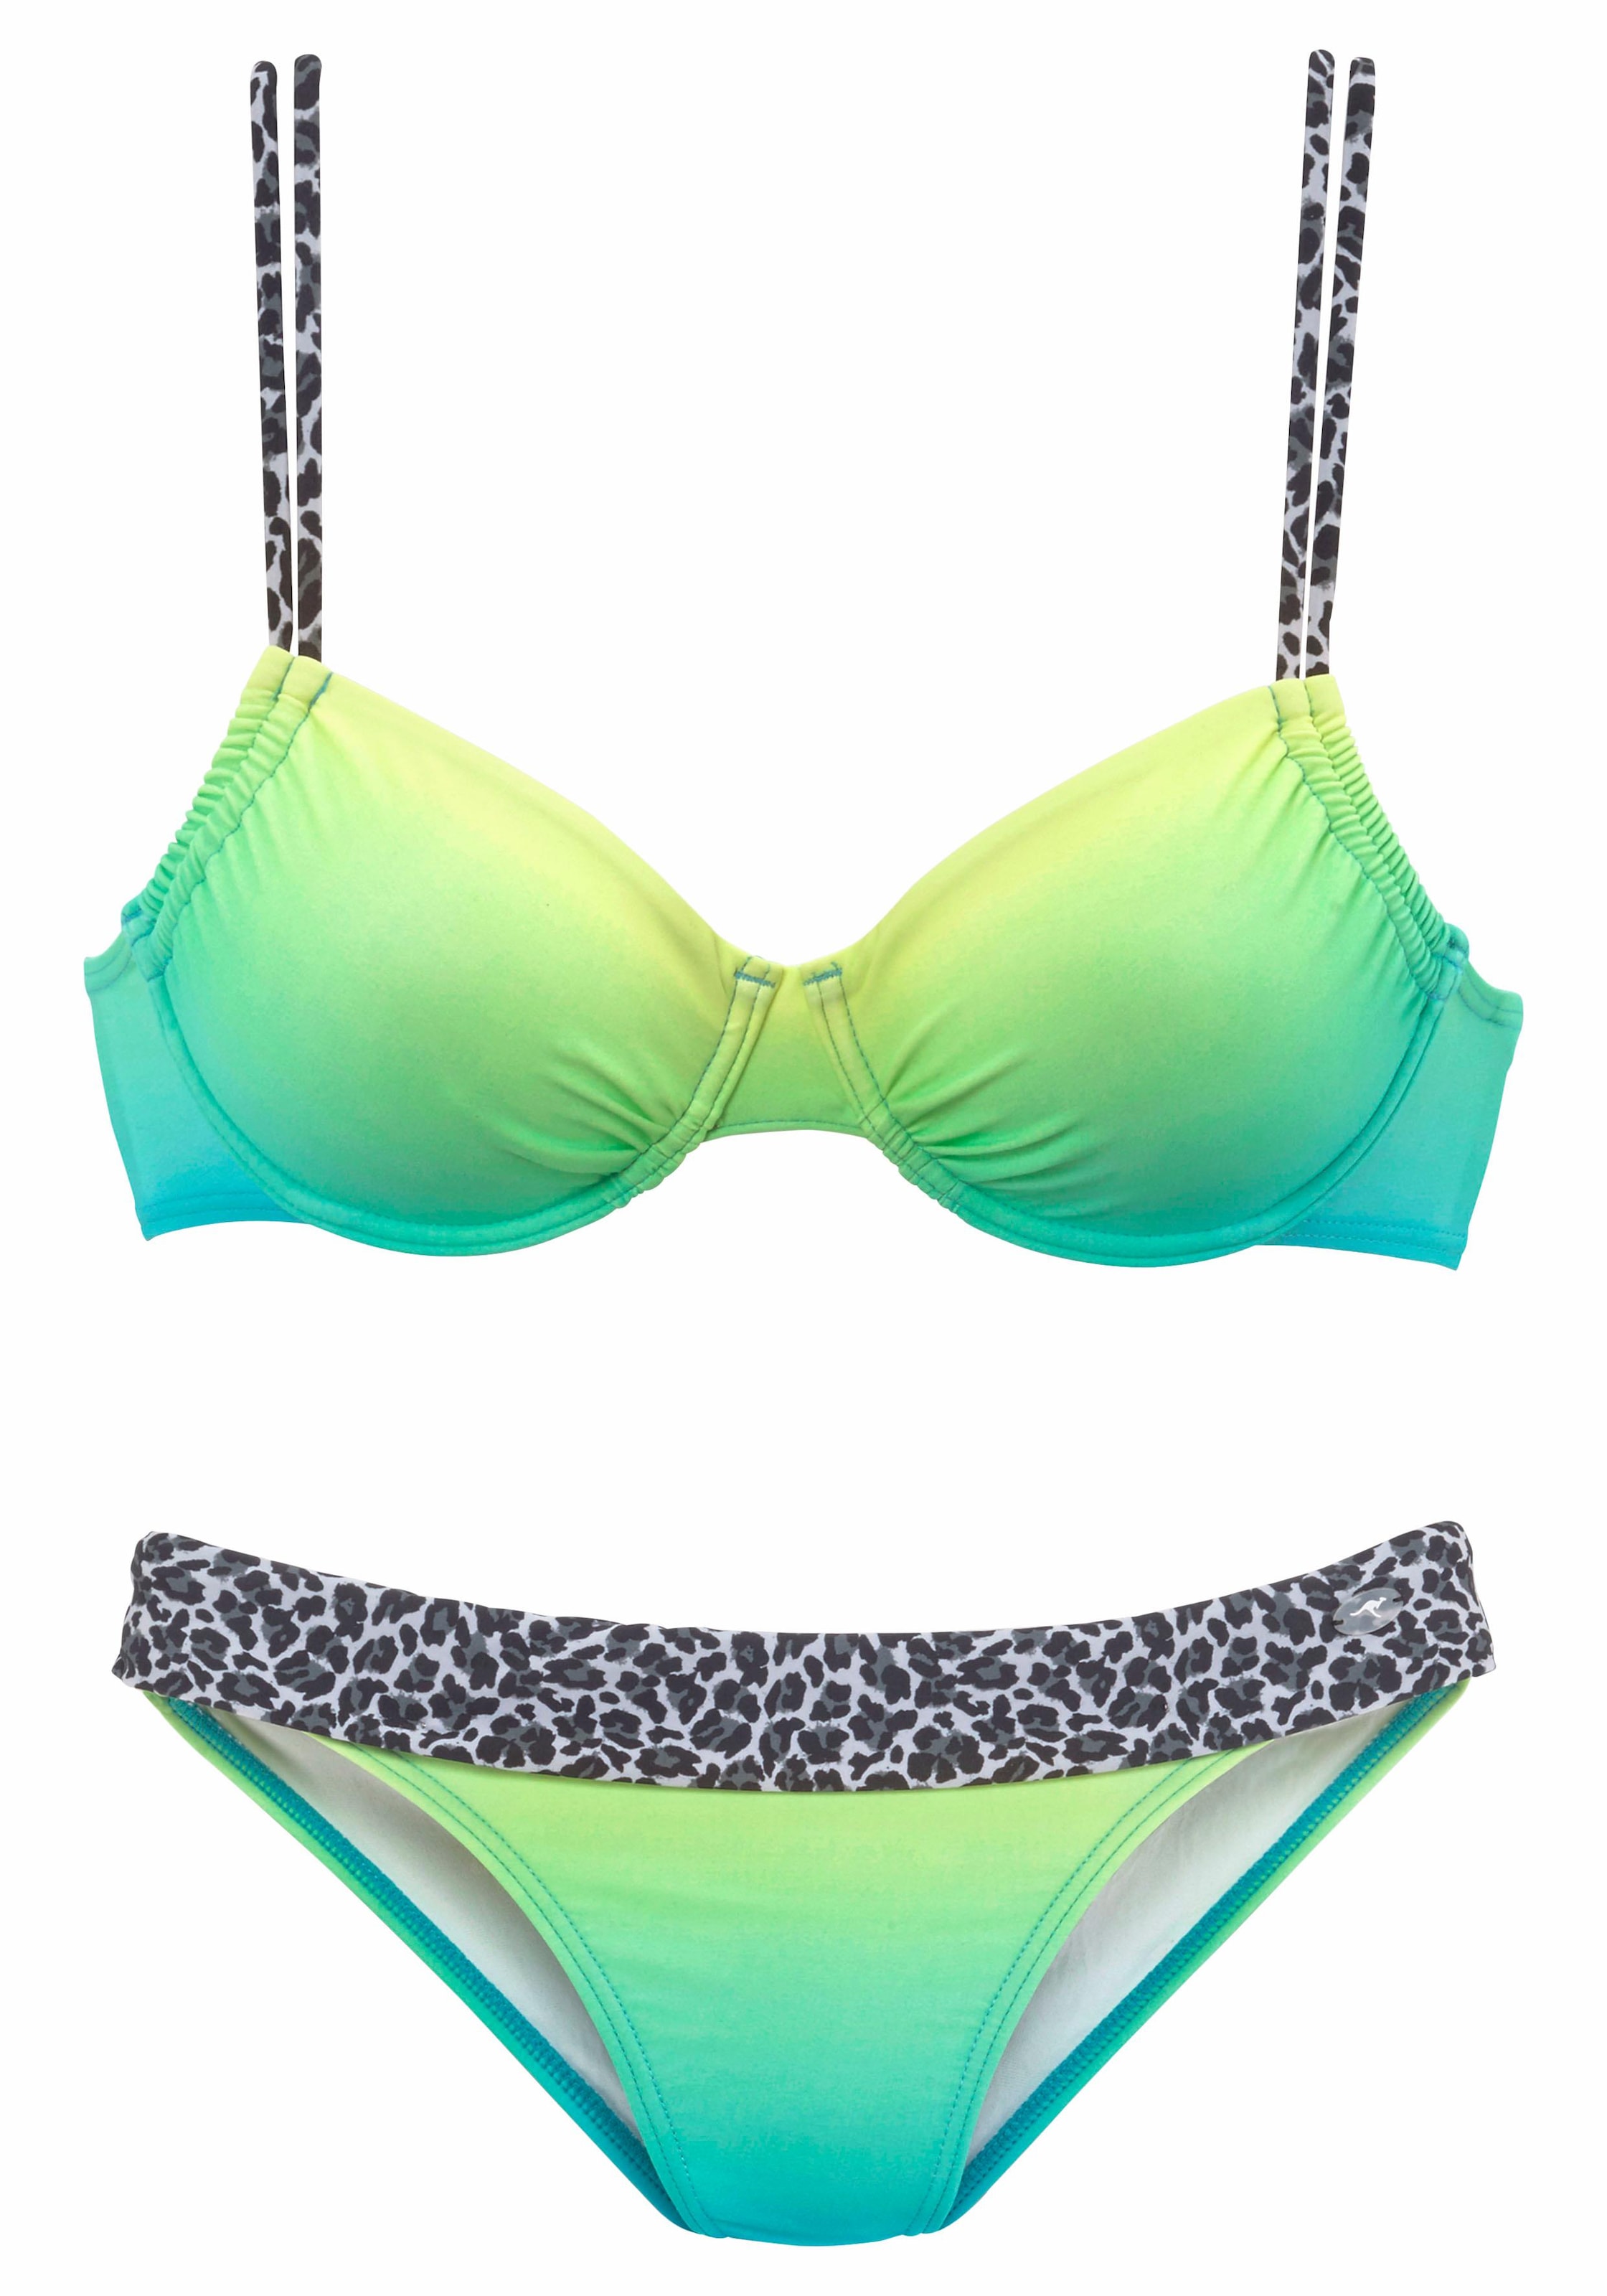 KangaROOS Bügel-Bikini, mit trendigen Details im Leoprint shoppen